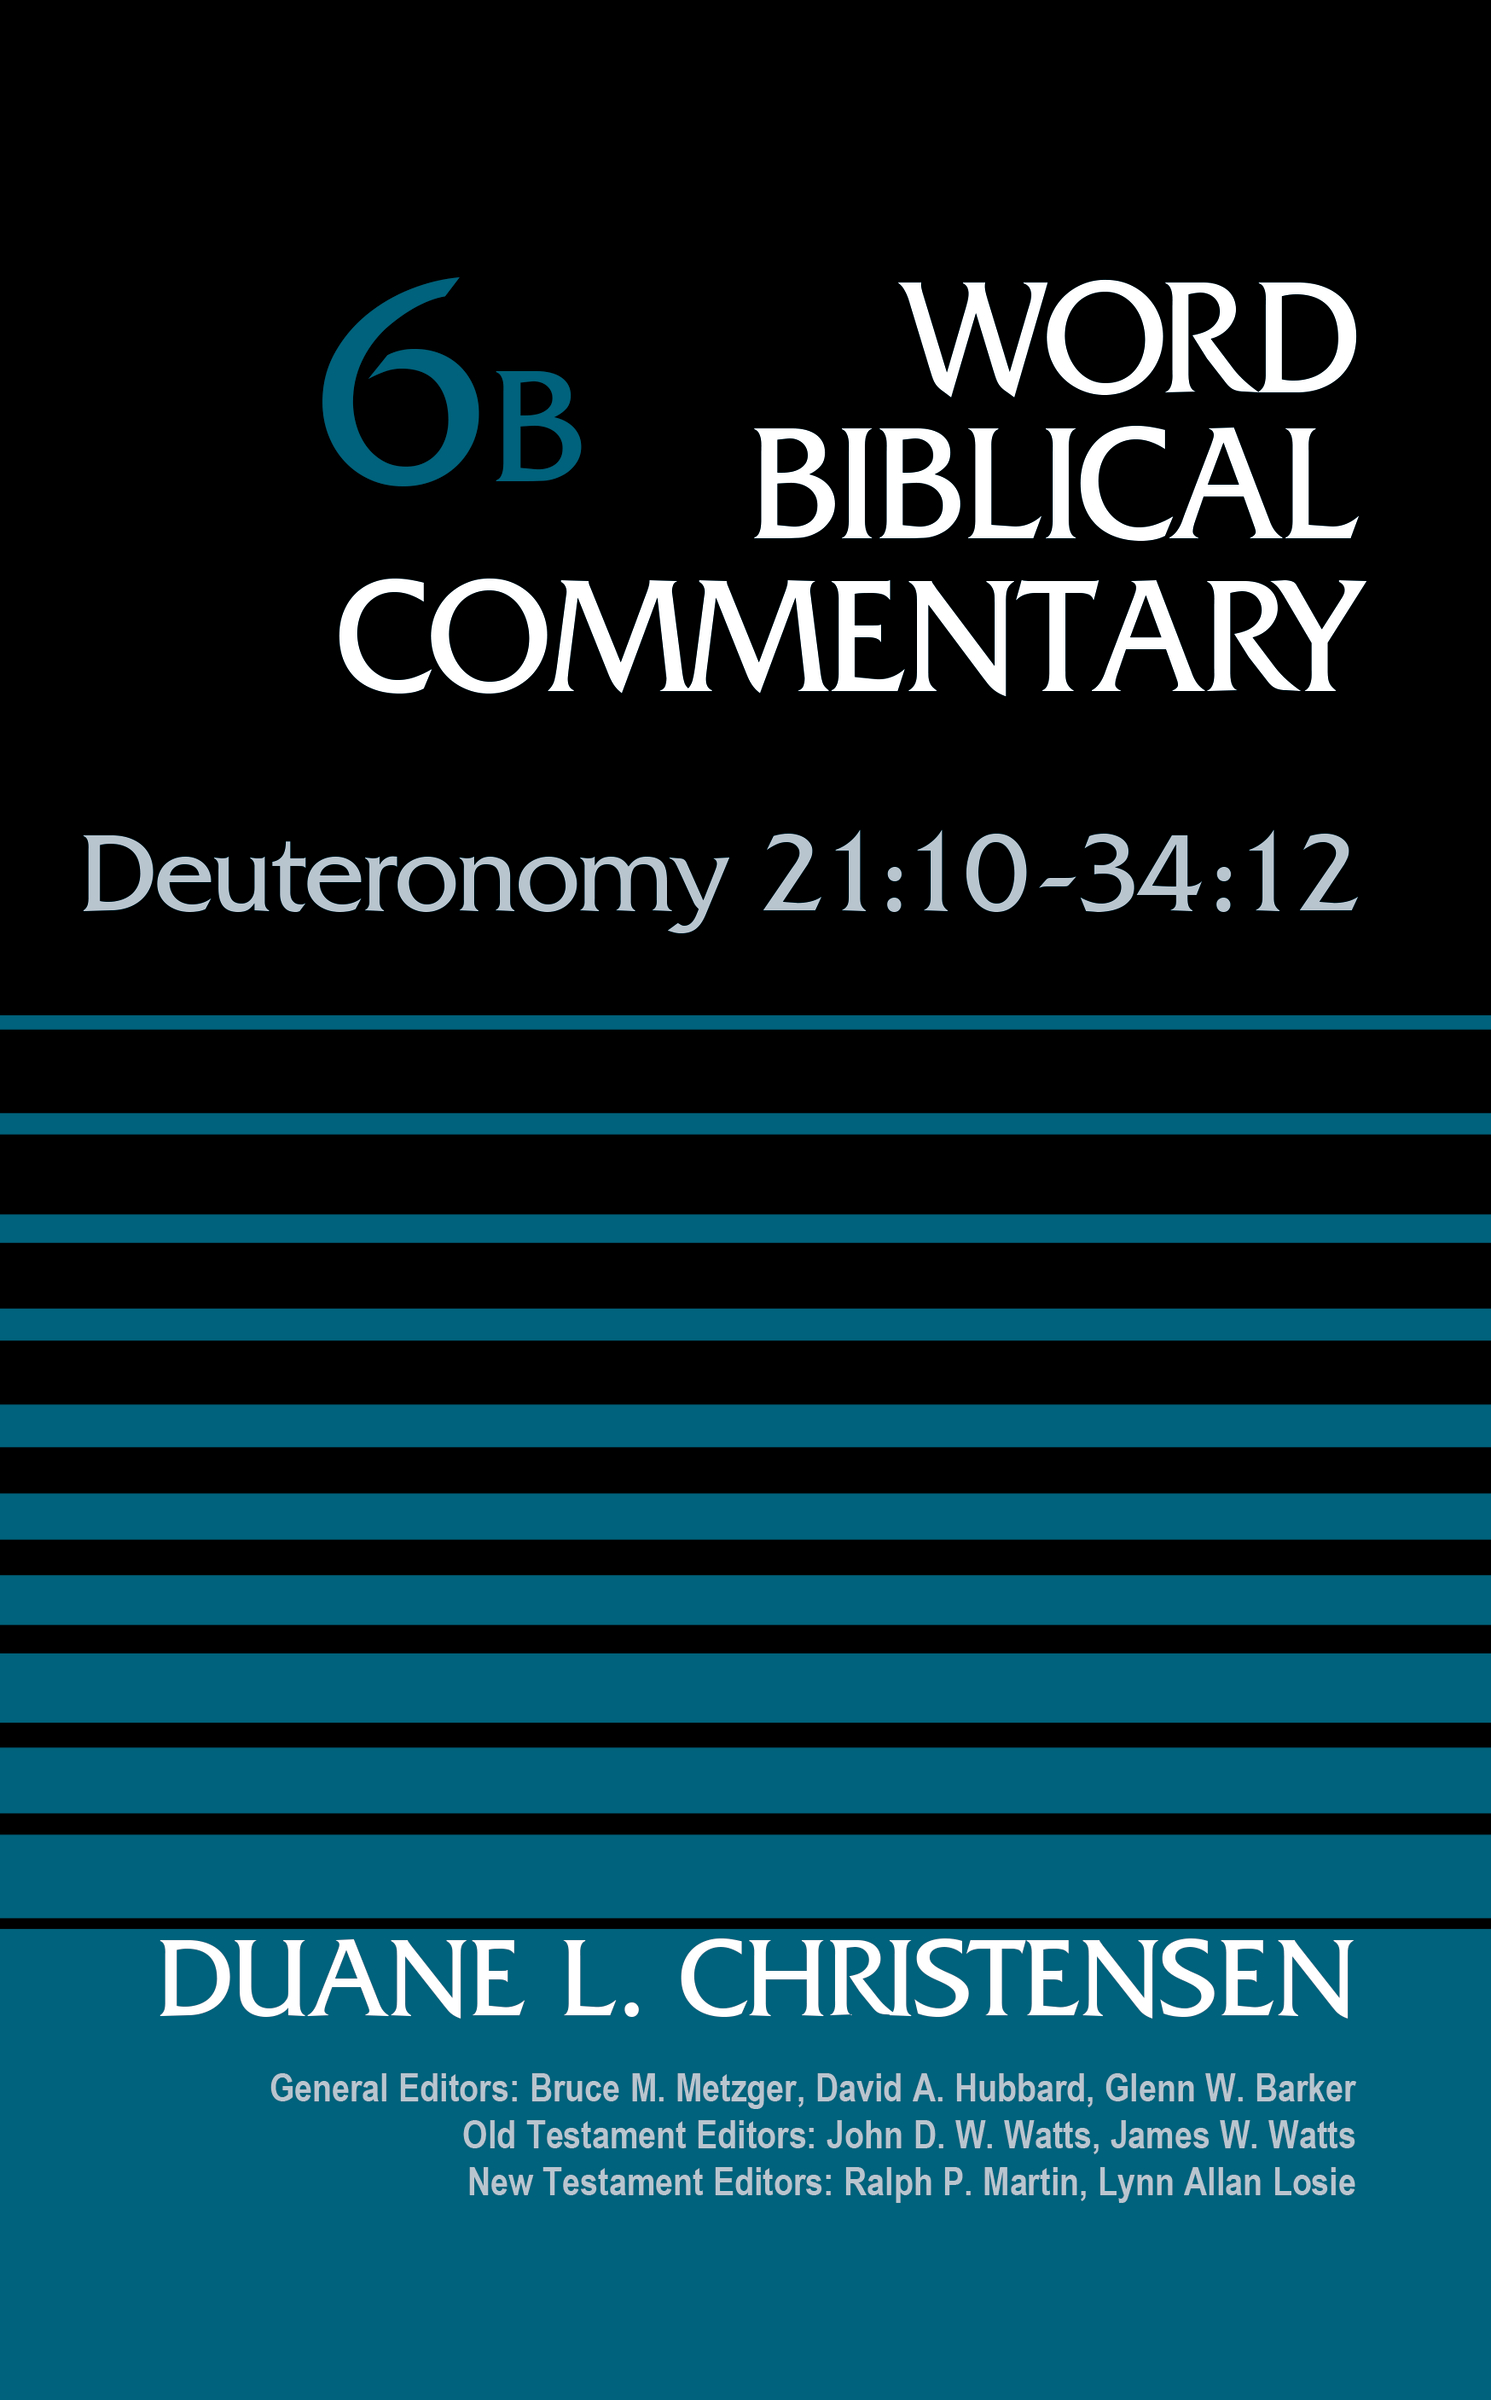 Deuteronomy 21:10-34:12, Volume 6B